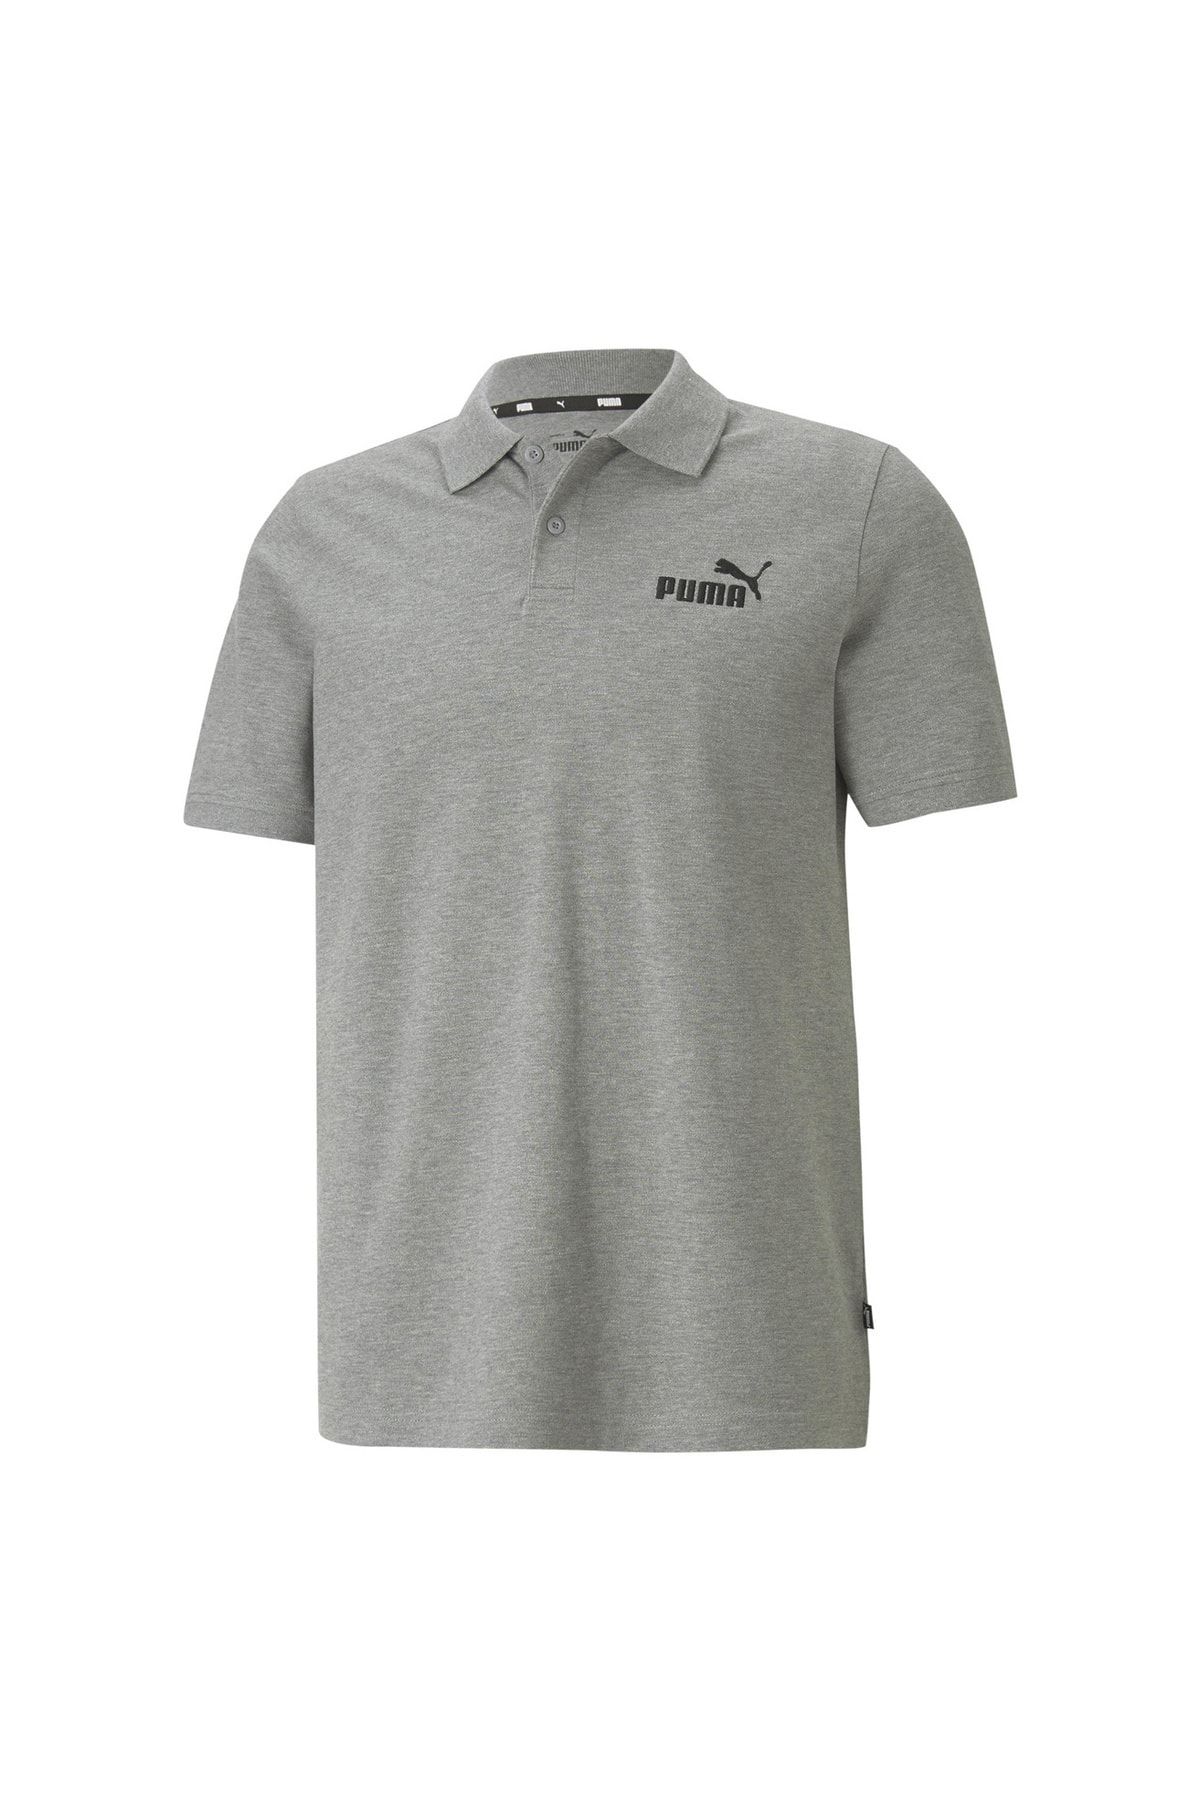 Puma Round Neck Plain Gray Men\'s T-Shirt 58667403 ESS Pique Polo Medium G -  Trendyol